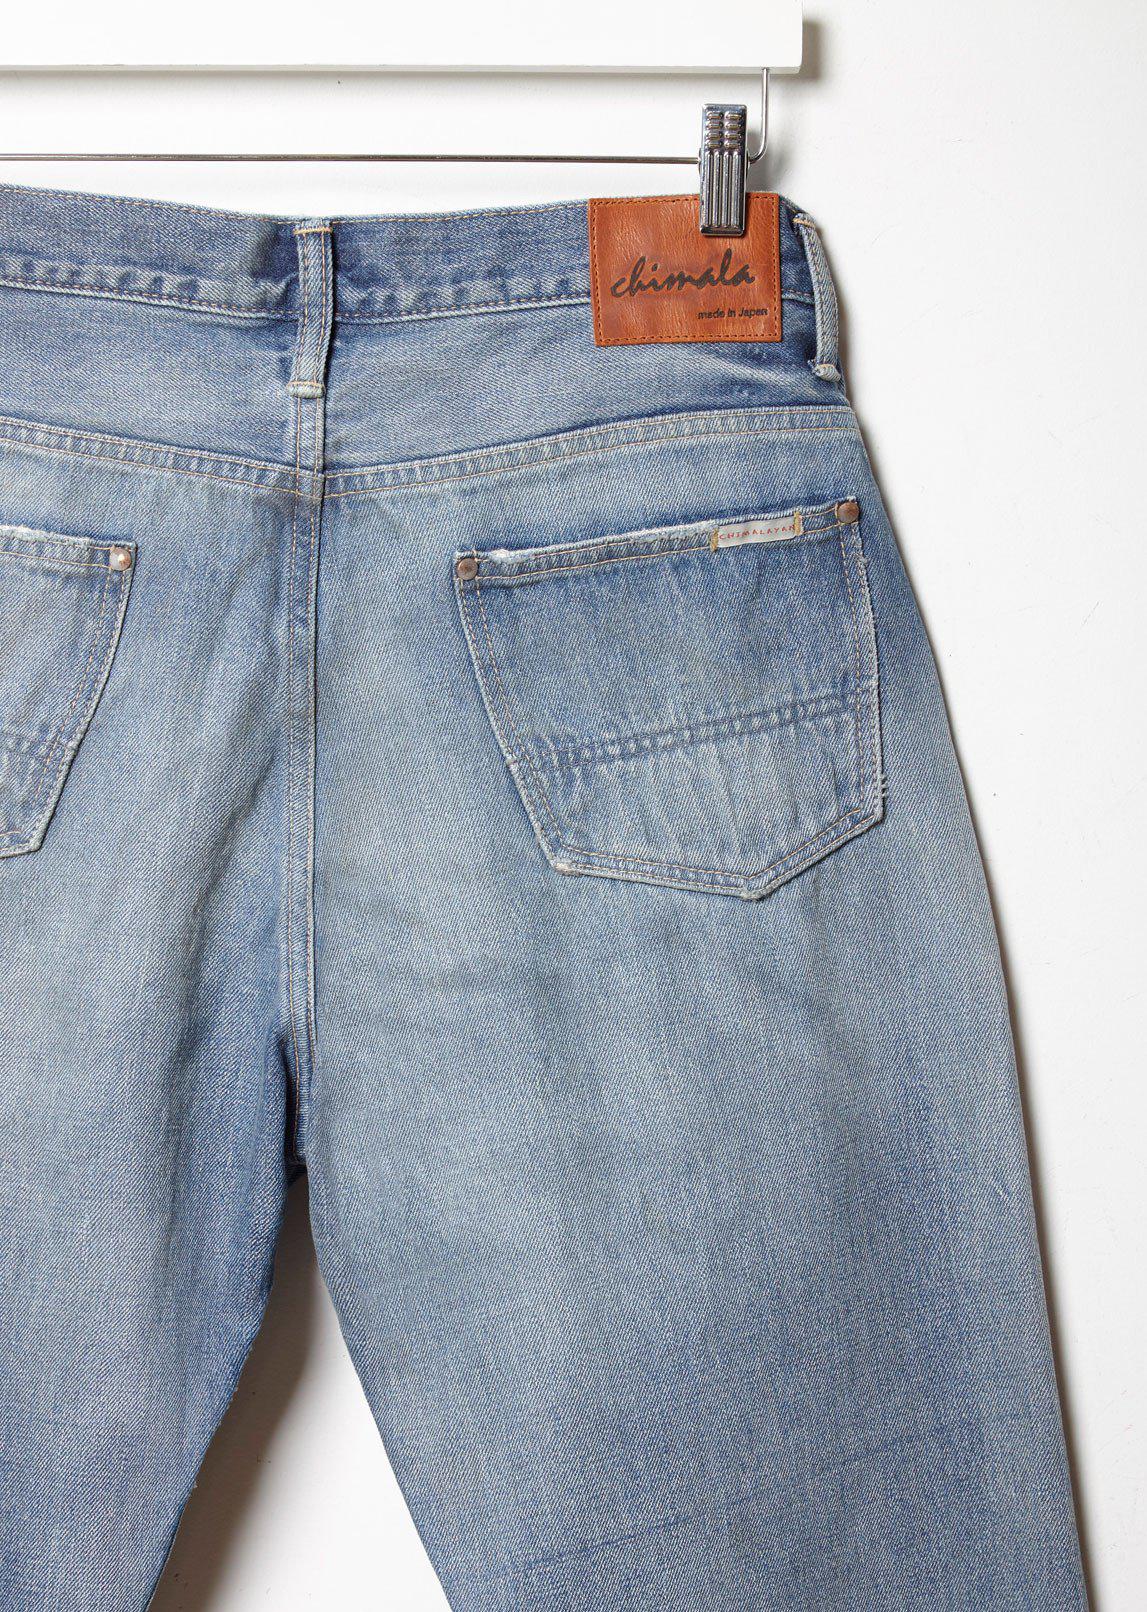 Chimala Denim Vintage Selvedge Jeans in Blue - Lyst